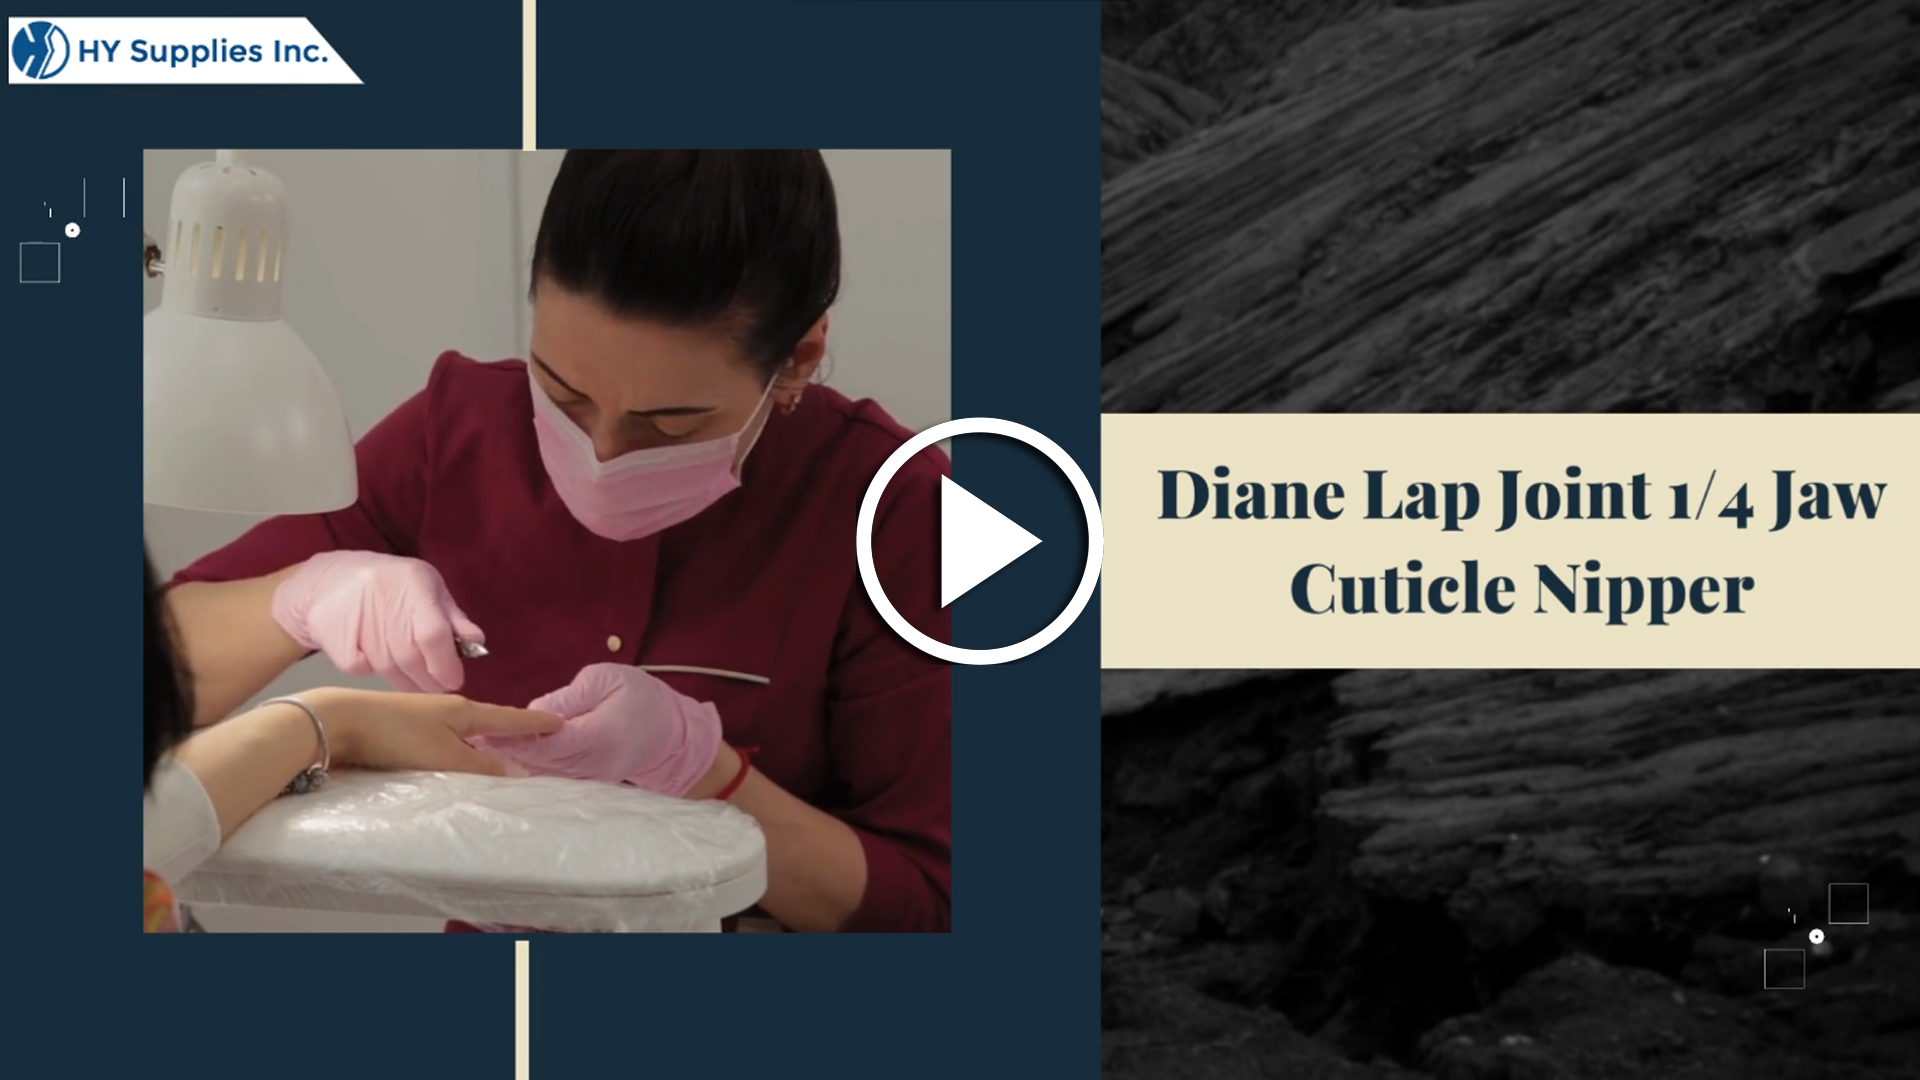 Diane Lap Joint 1/4 Jaw Cuticle Nipper